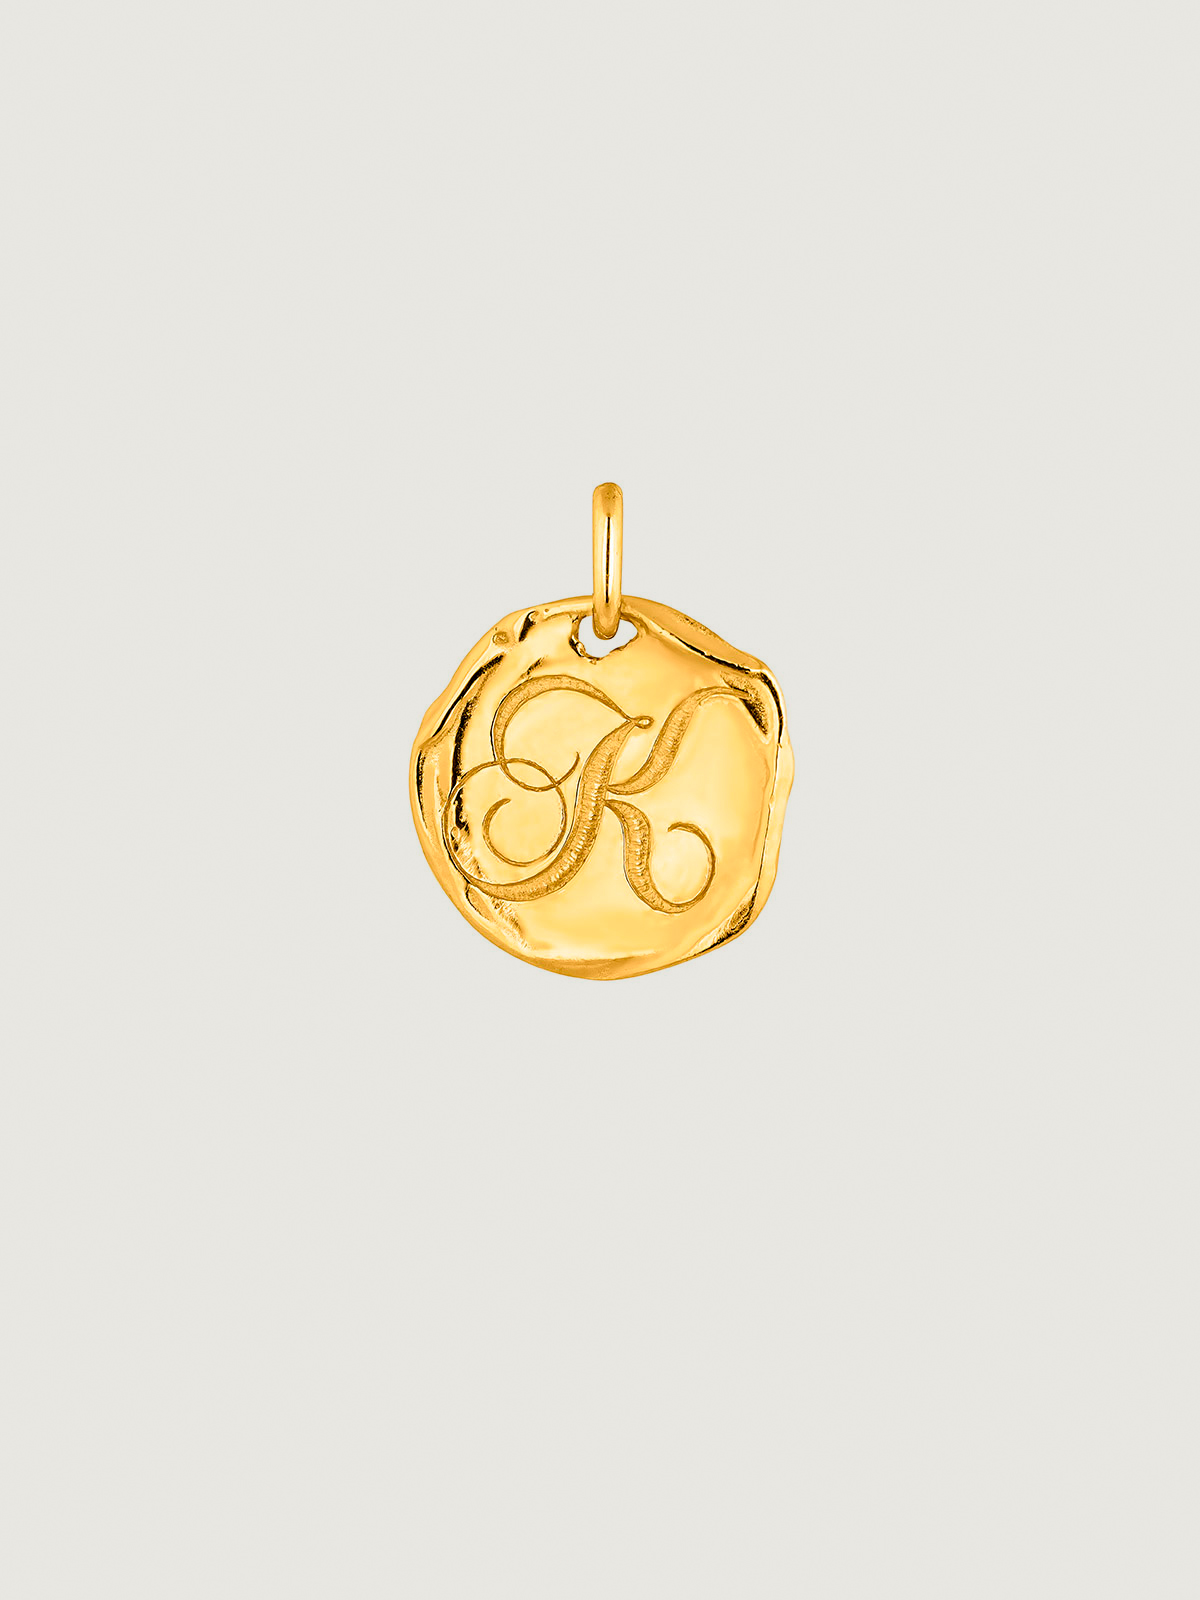 Charm artesanal de plata 925 bañada en oro amarillo de 18K con inicial K